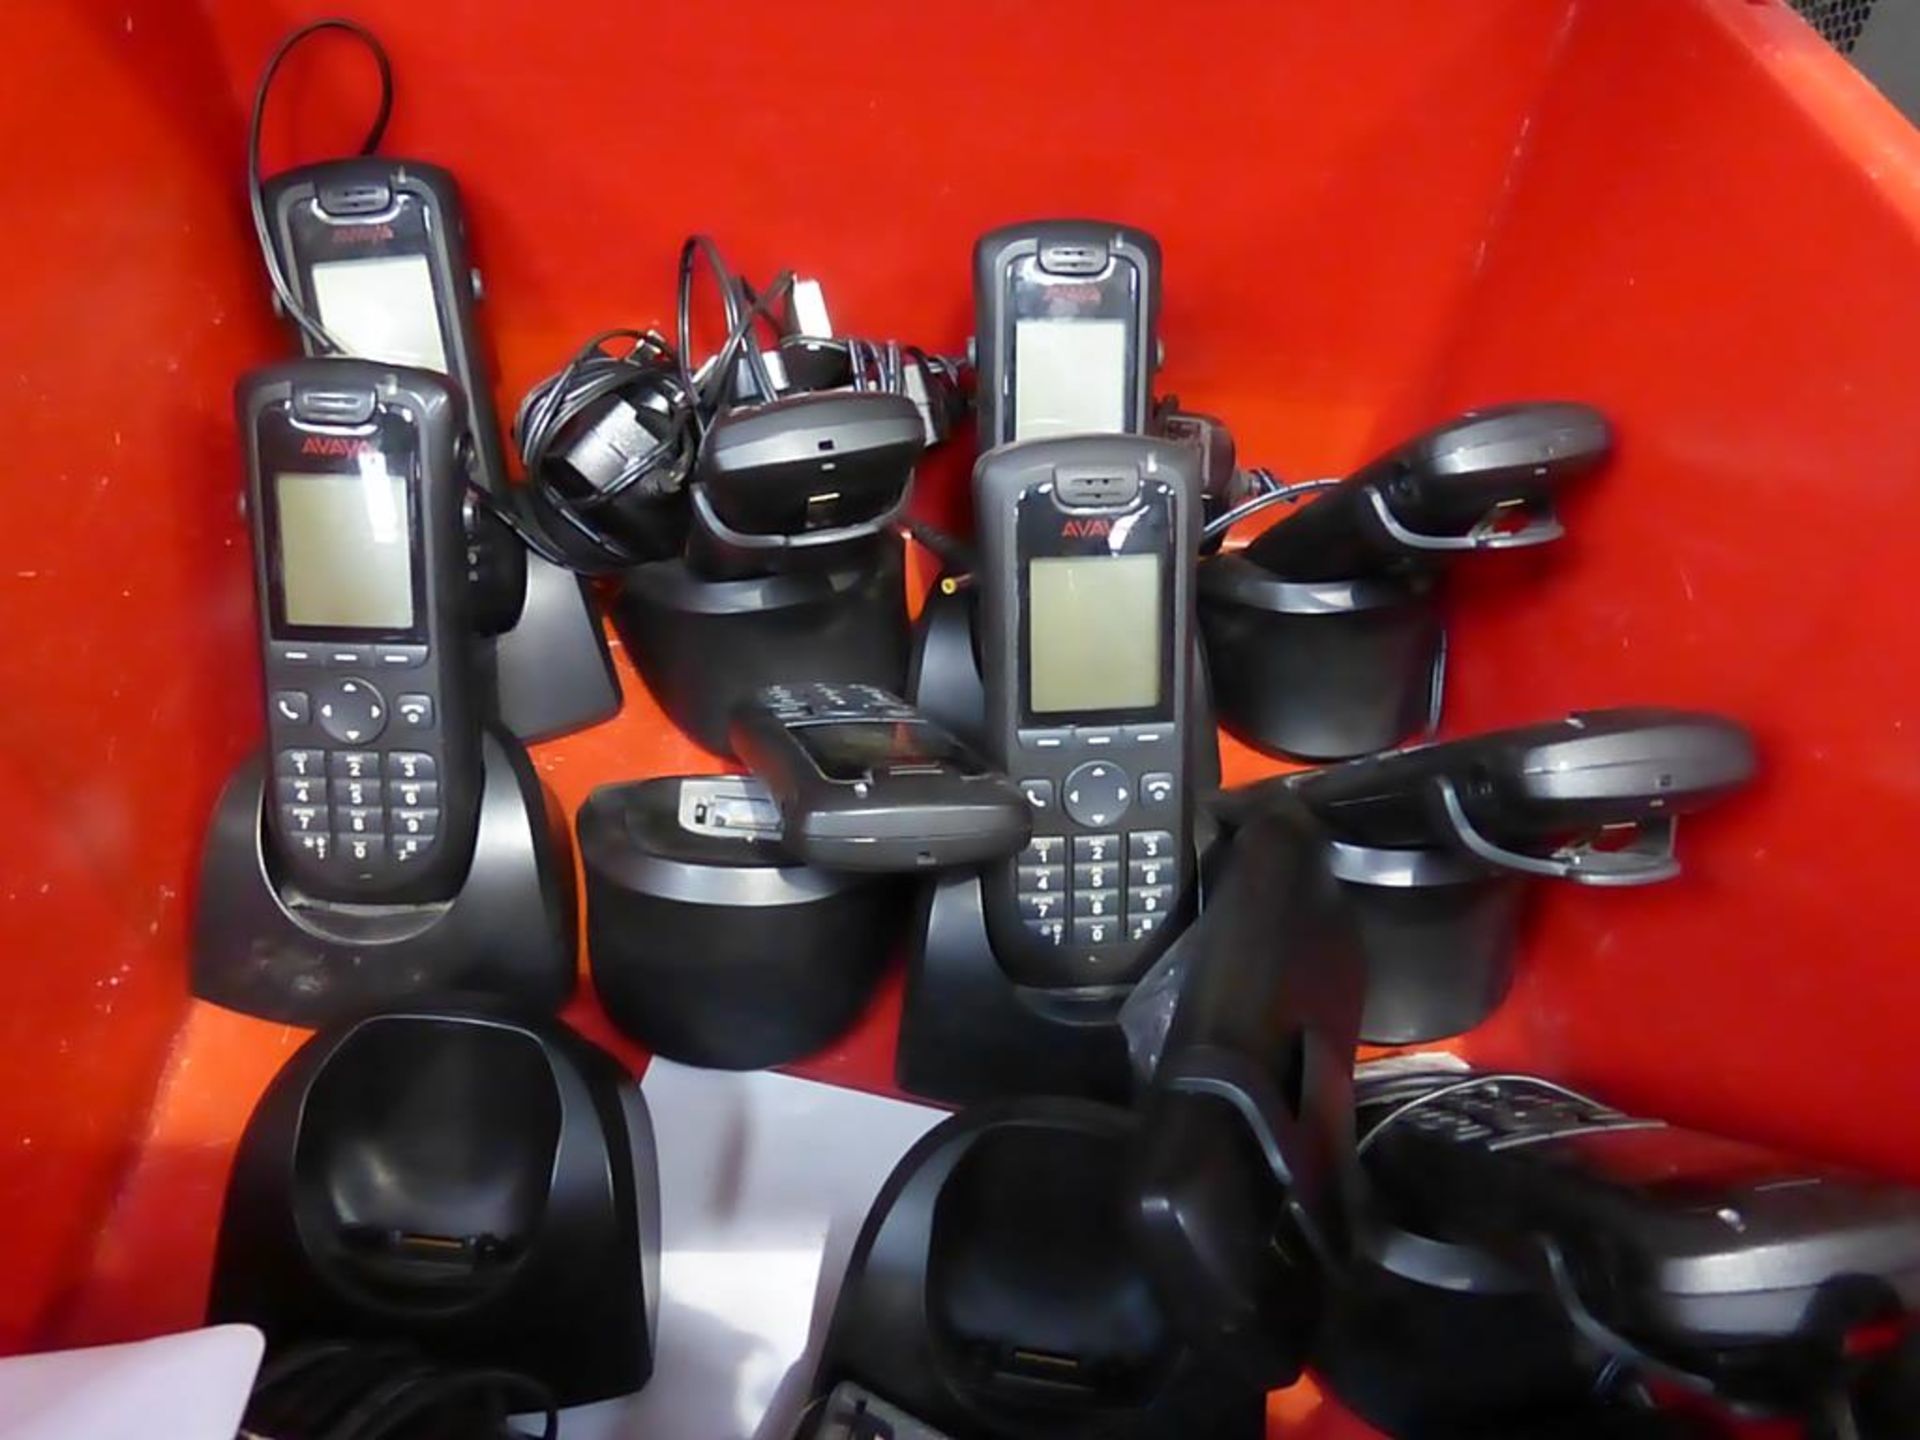 12 x Avaya DC3 Phones & Charges